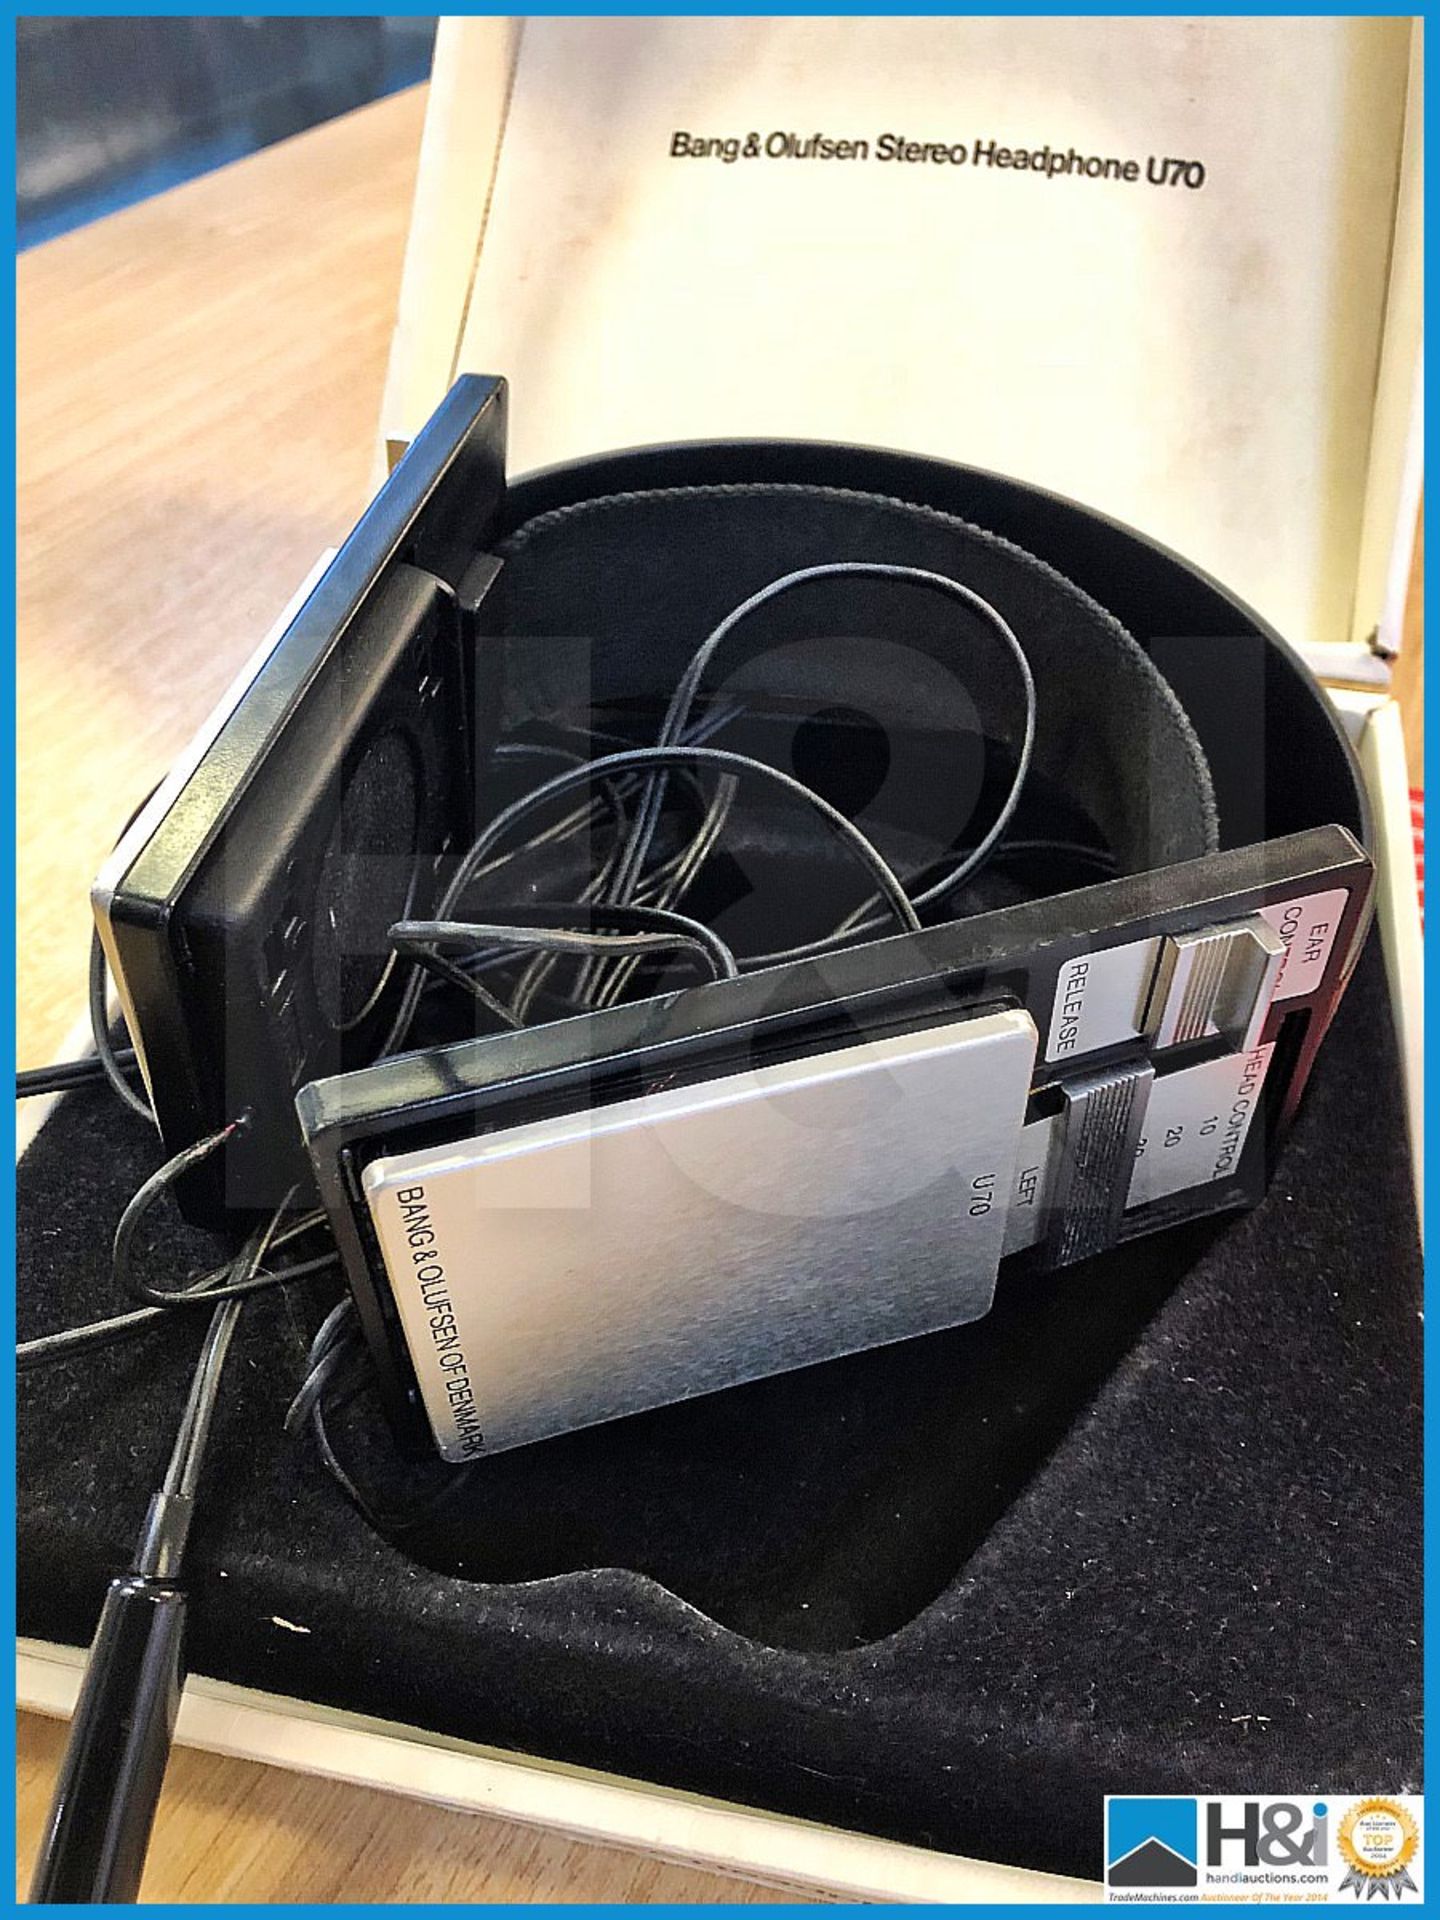 Bang & Olufsen Stereo U70 Headphones in box with paperwork